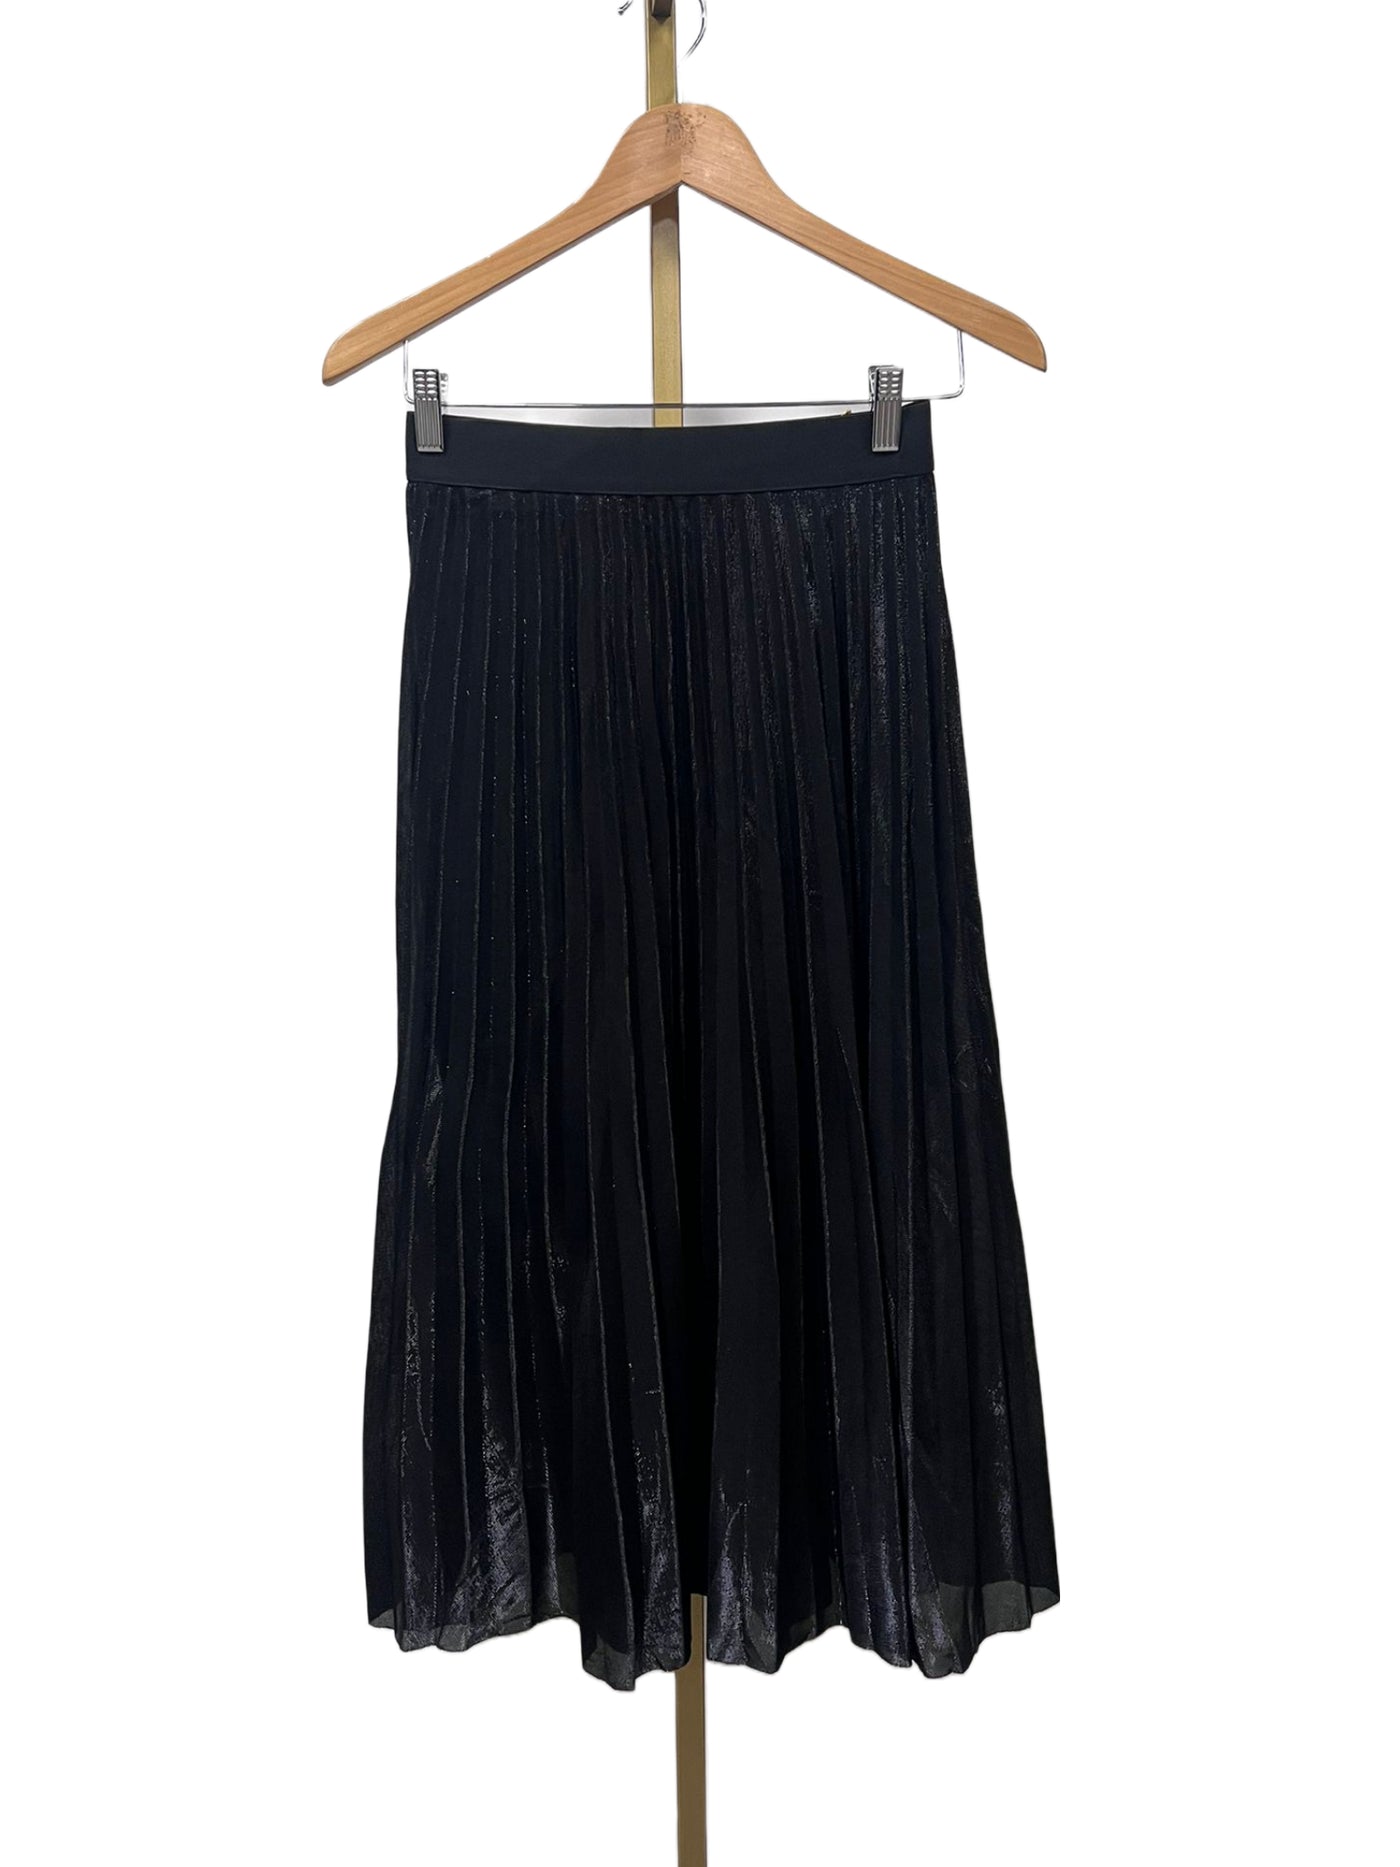 Skirt plisse glim 929 Zwart